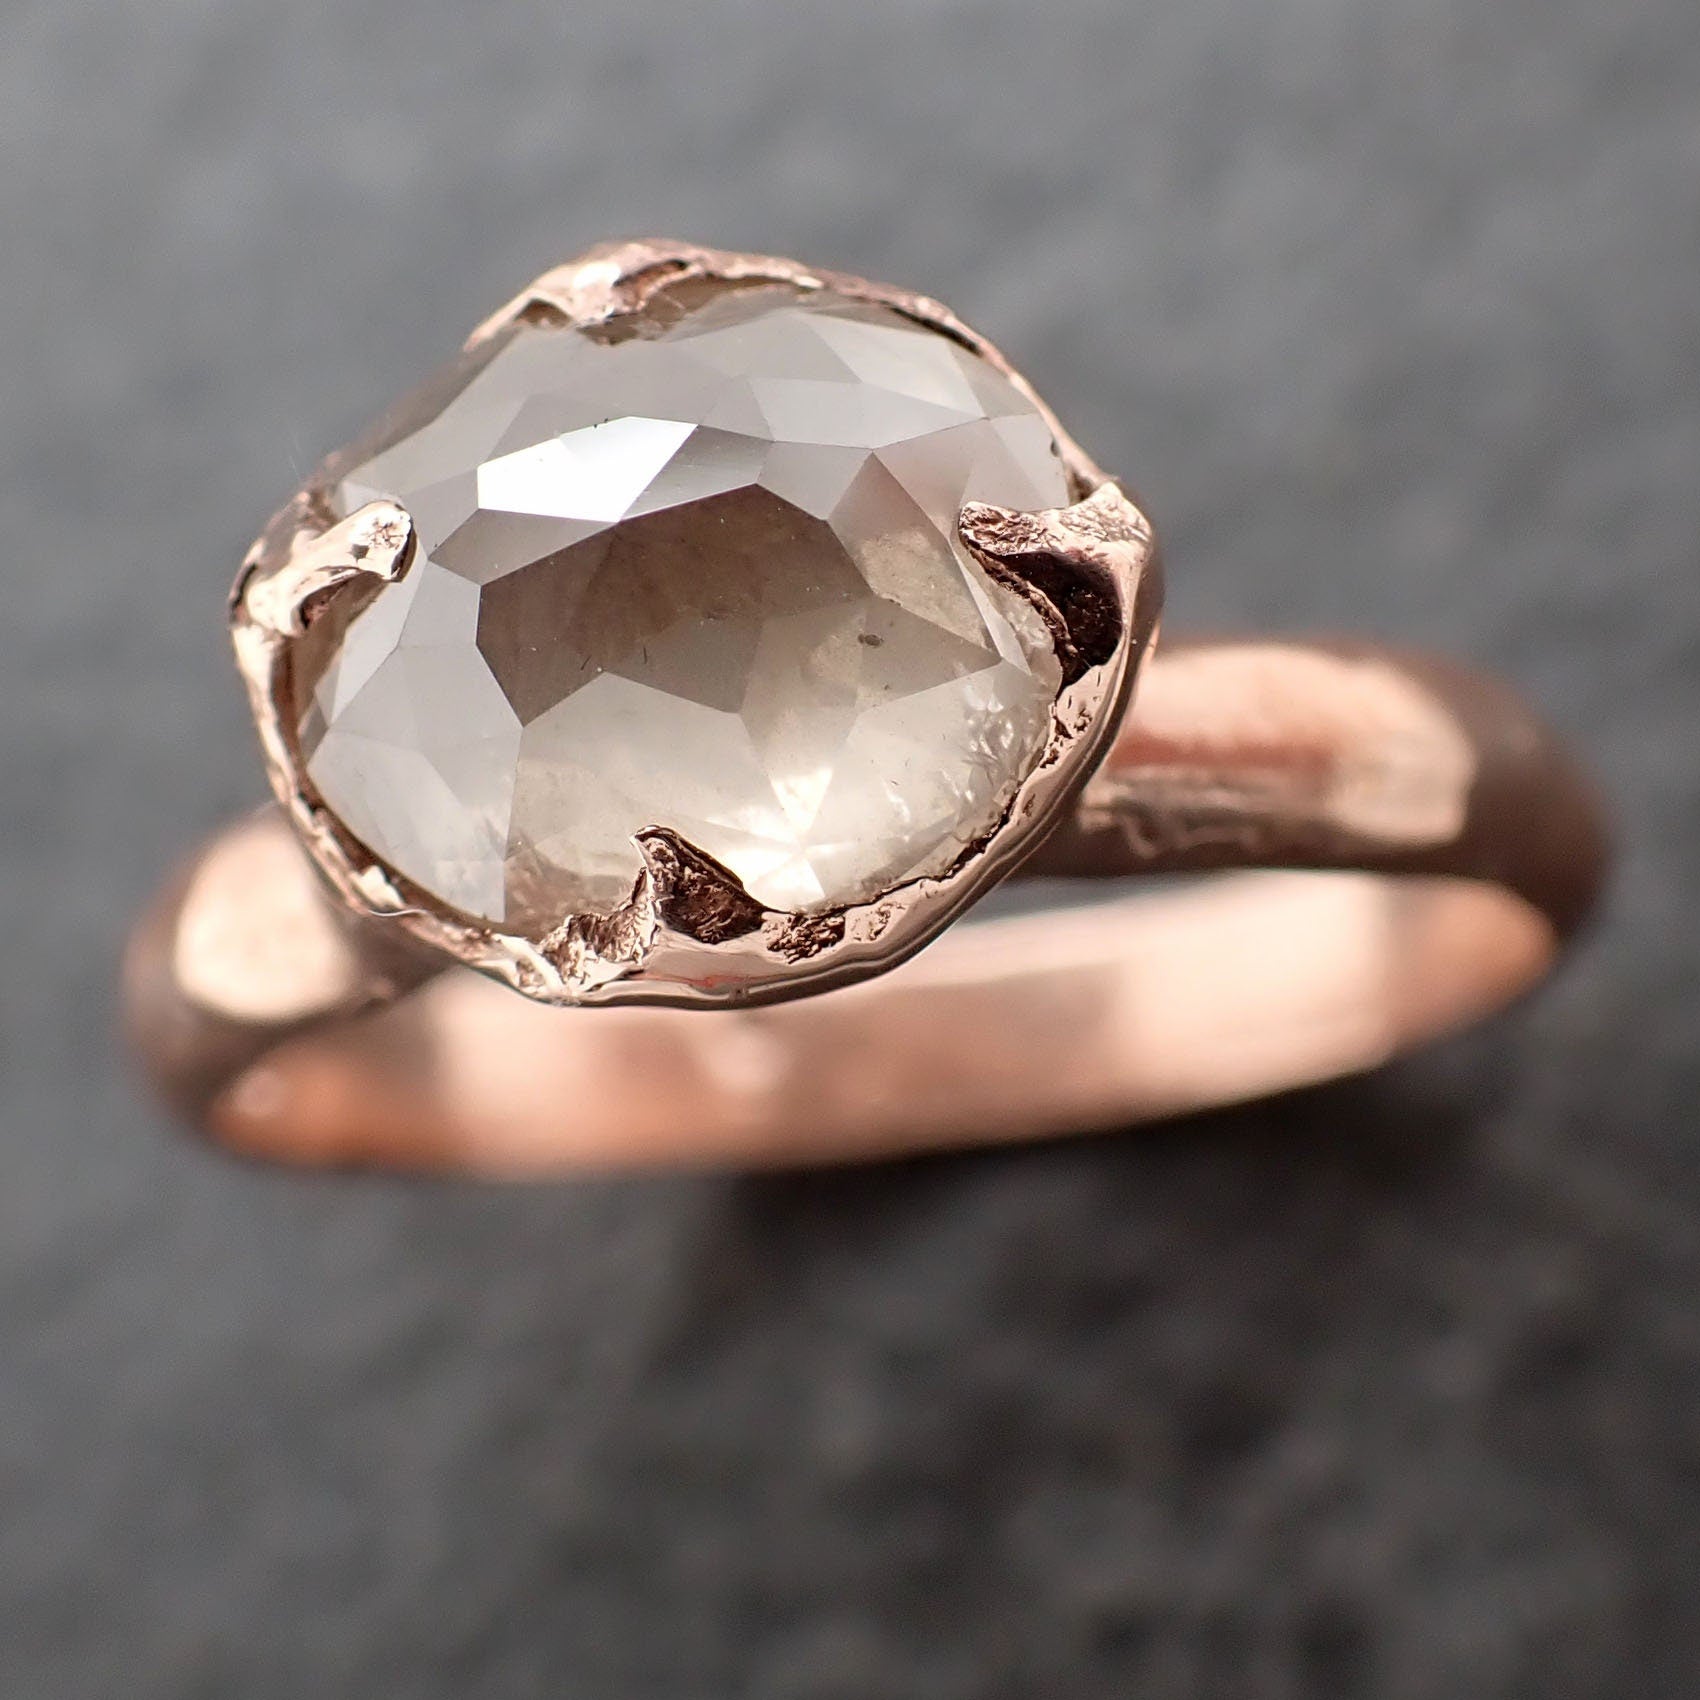 Fancy cut Solitaire Diamond Engagement 14k Rose Gold Wedding Ring byAngeline 3187